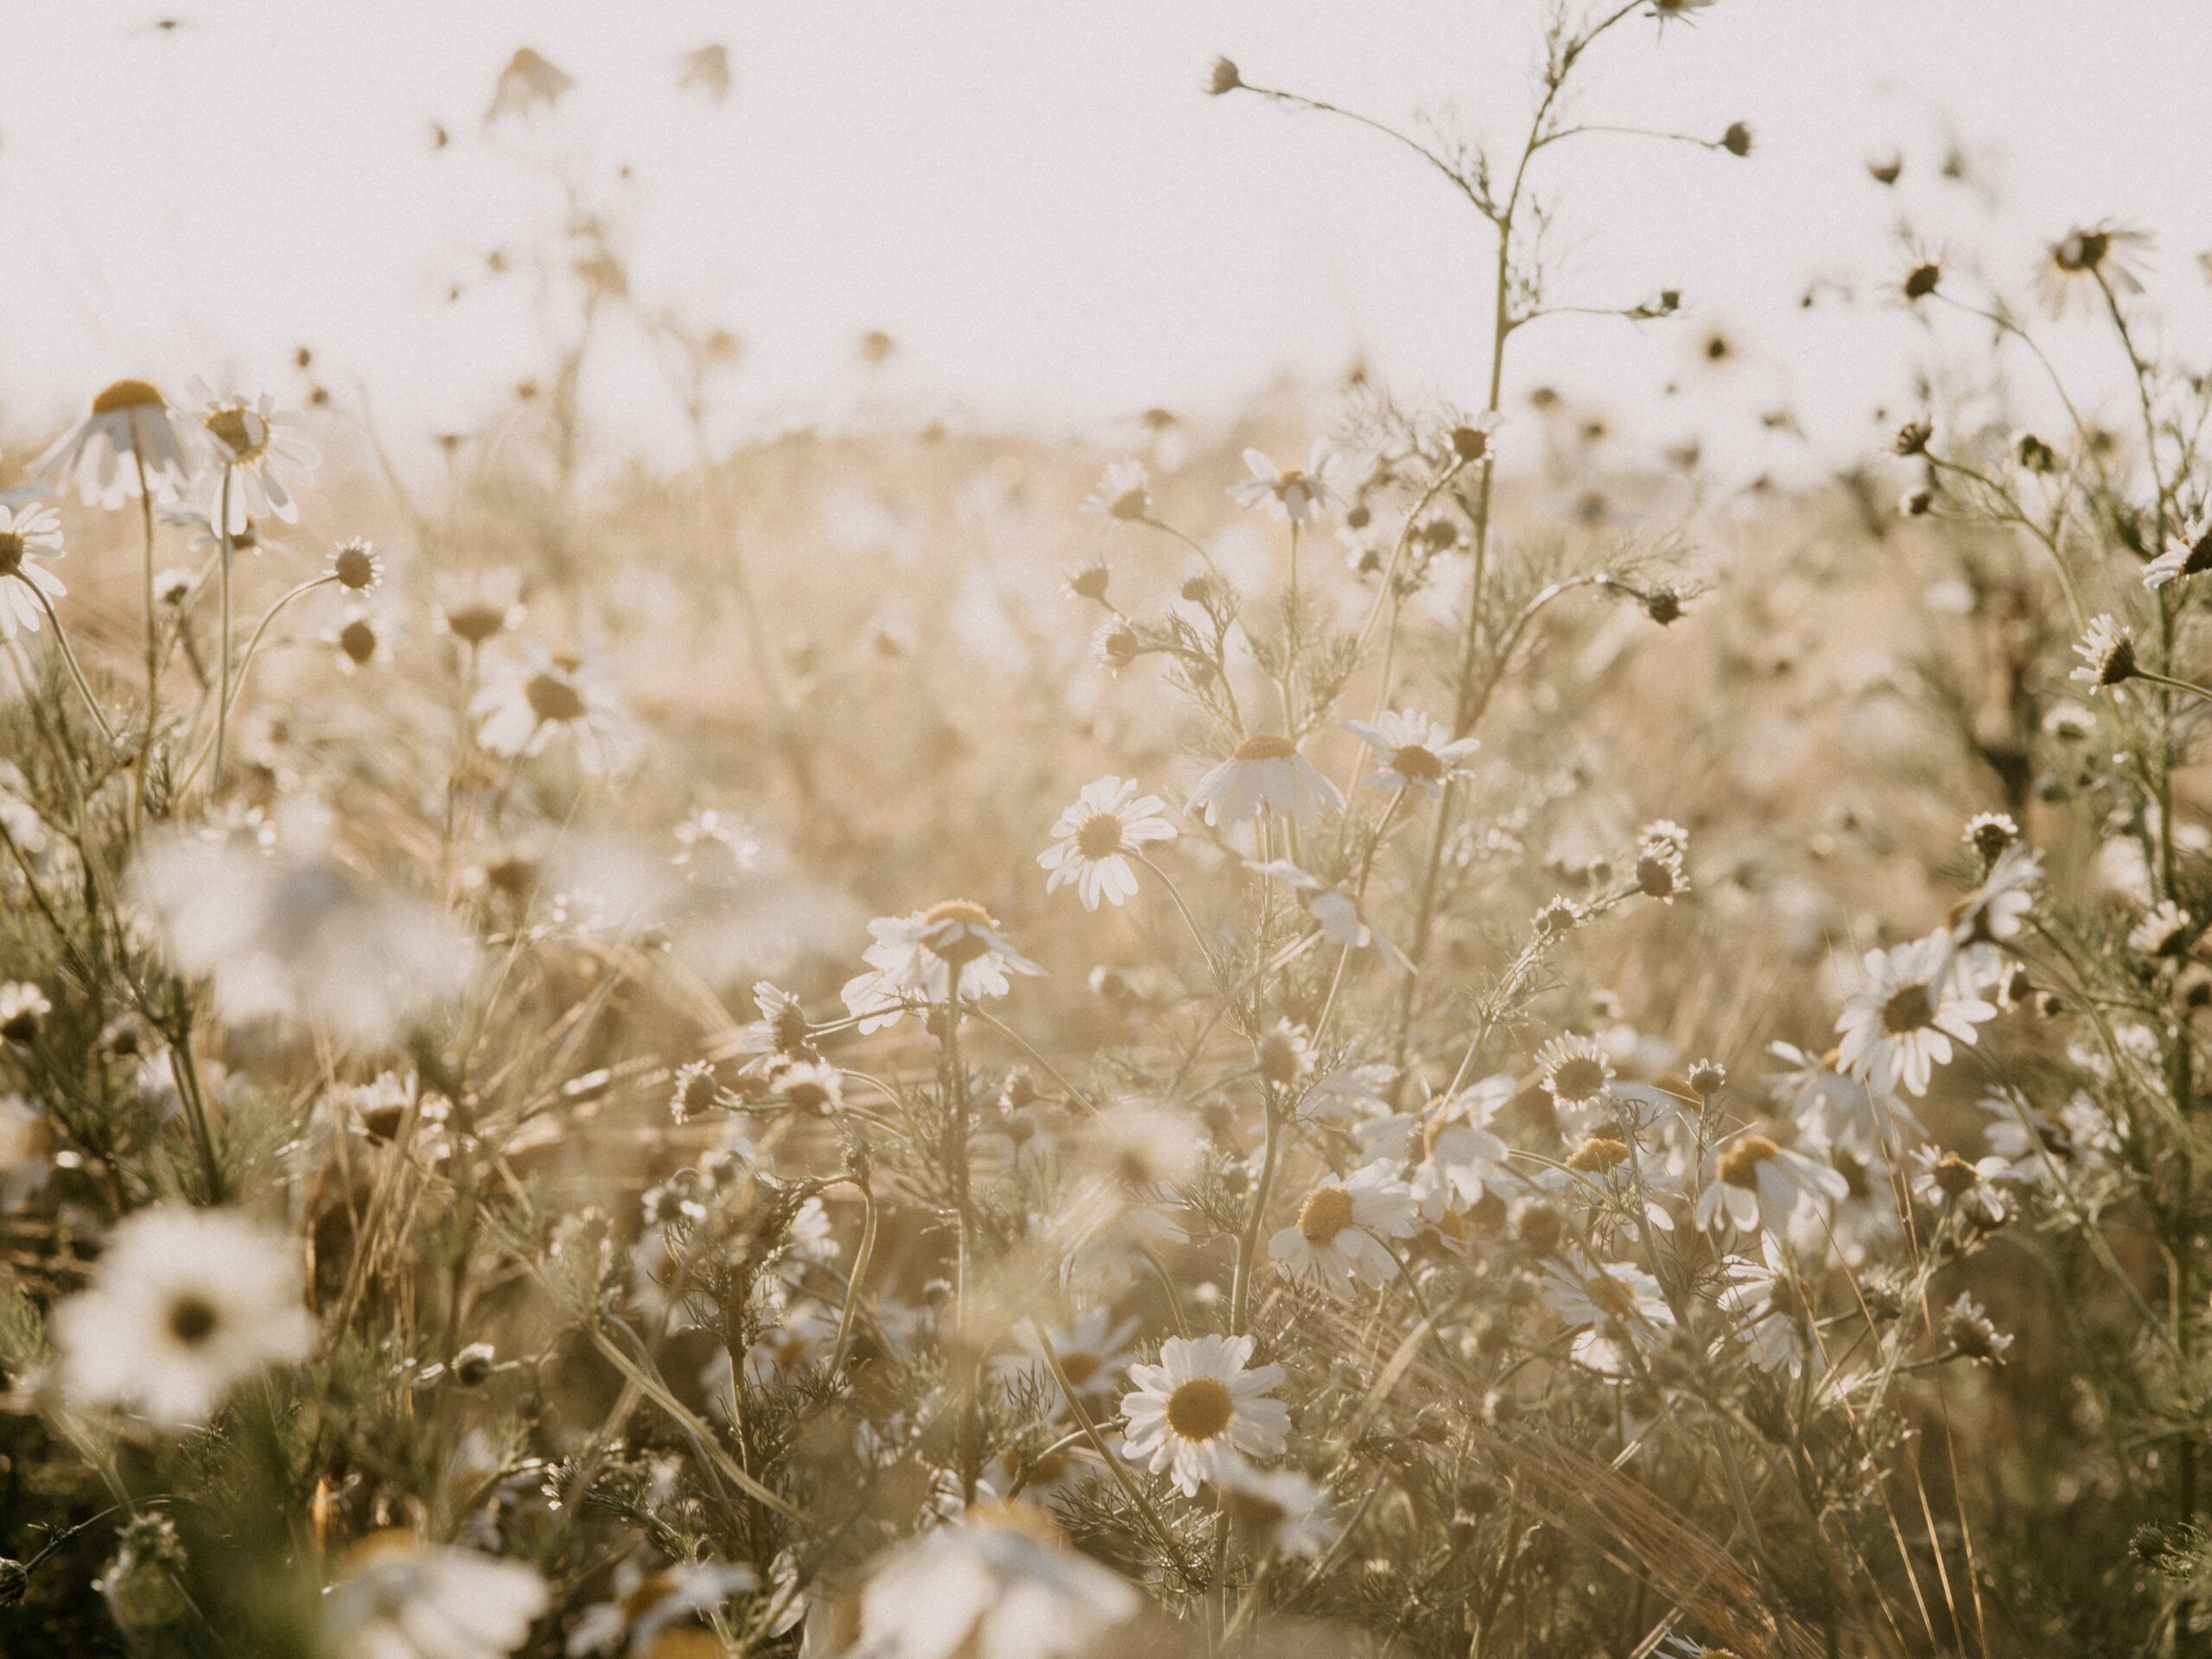 Wildflowers growing | Photo by Annie Spratt on Unsplash